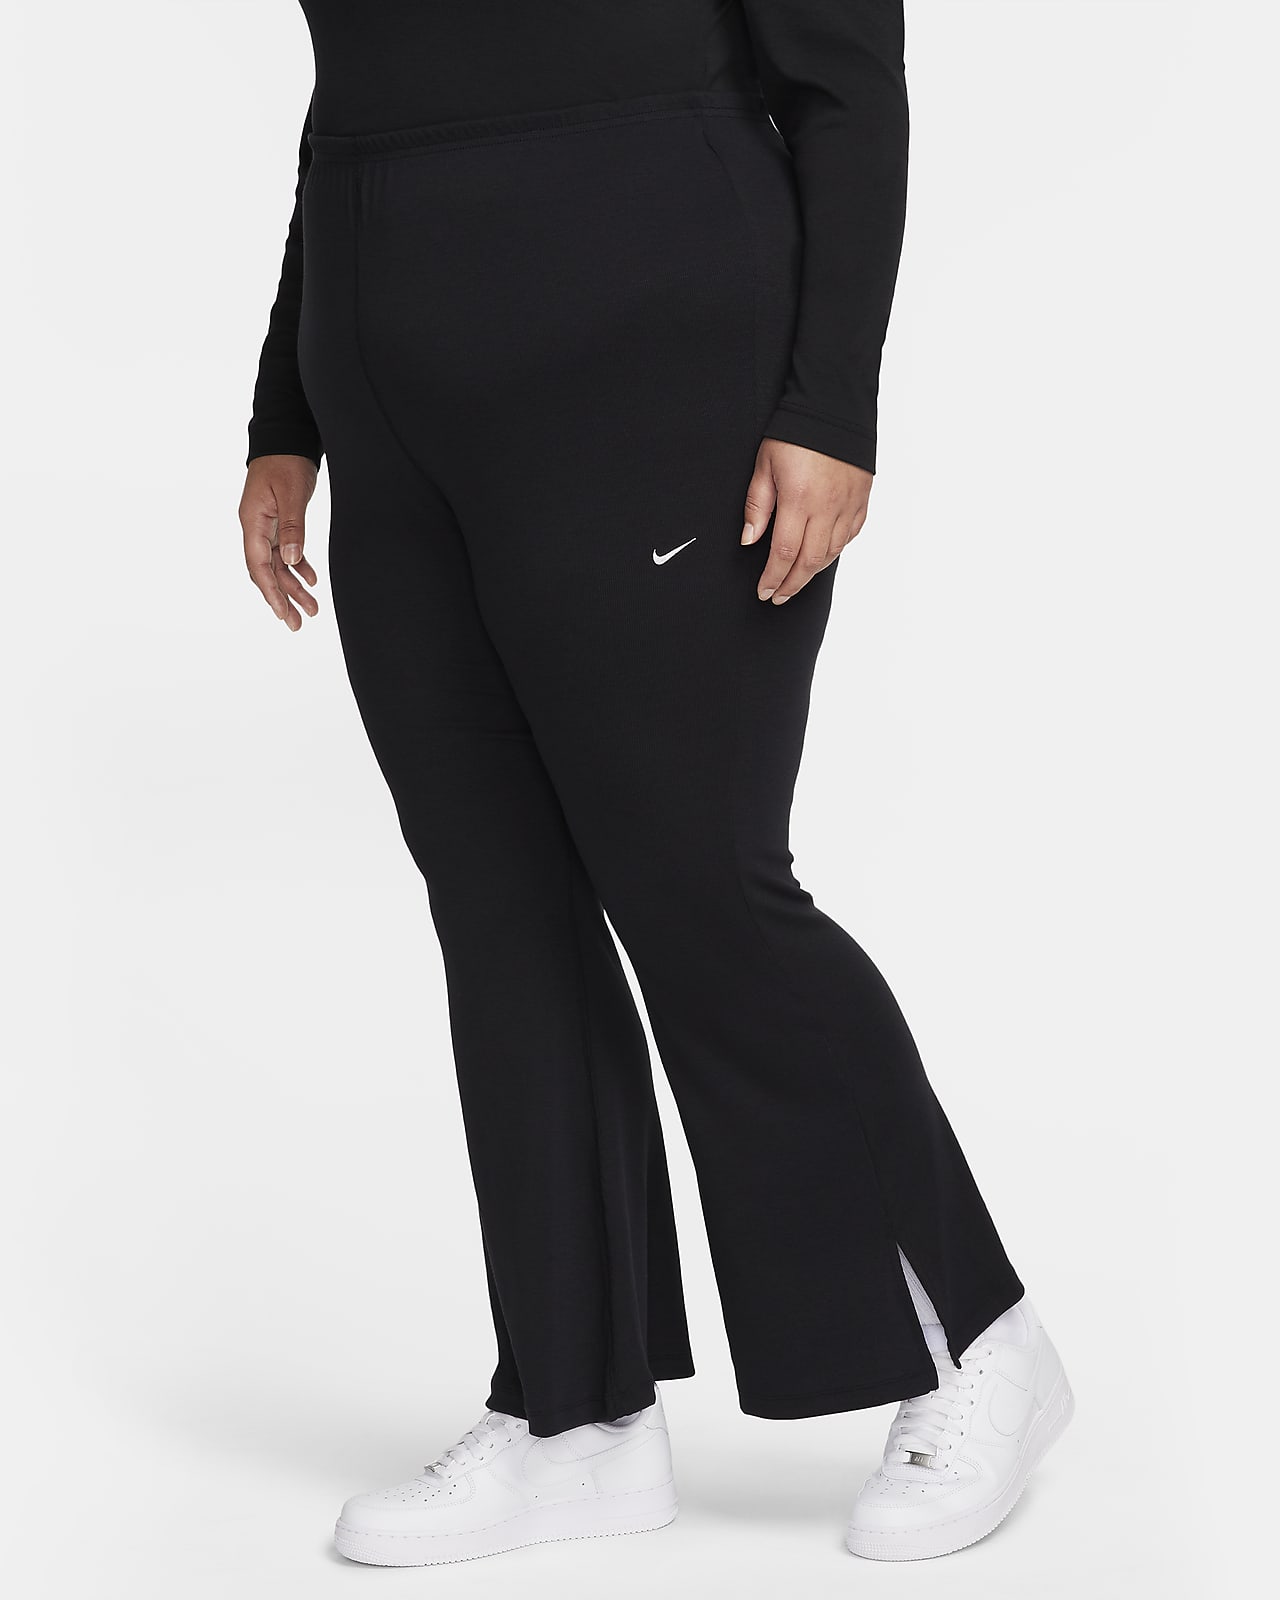 Mujer Tallas grandes Ropa. Nike US